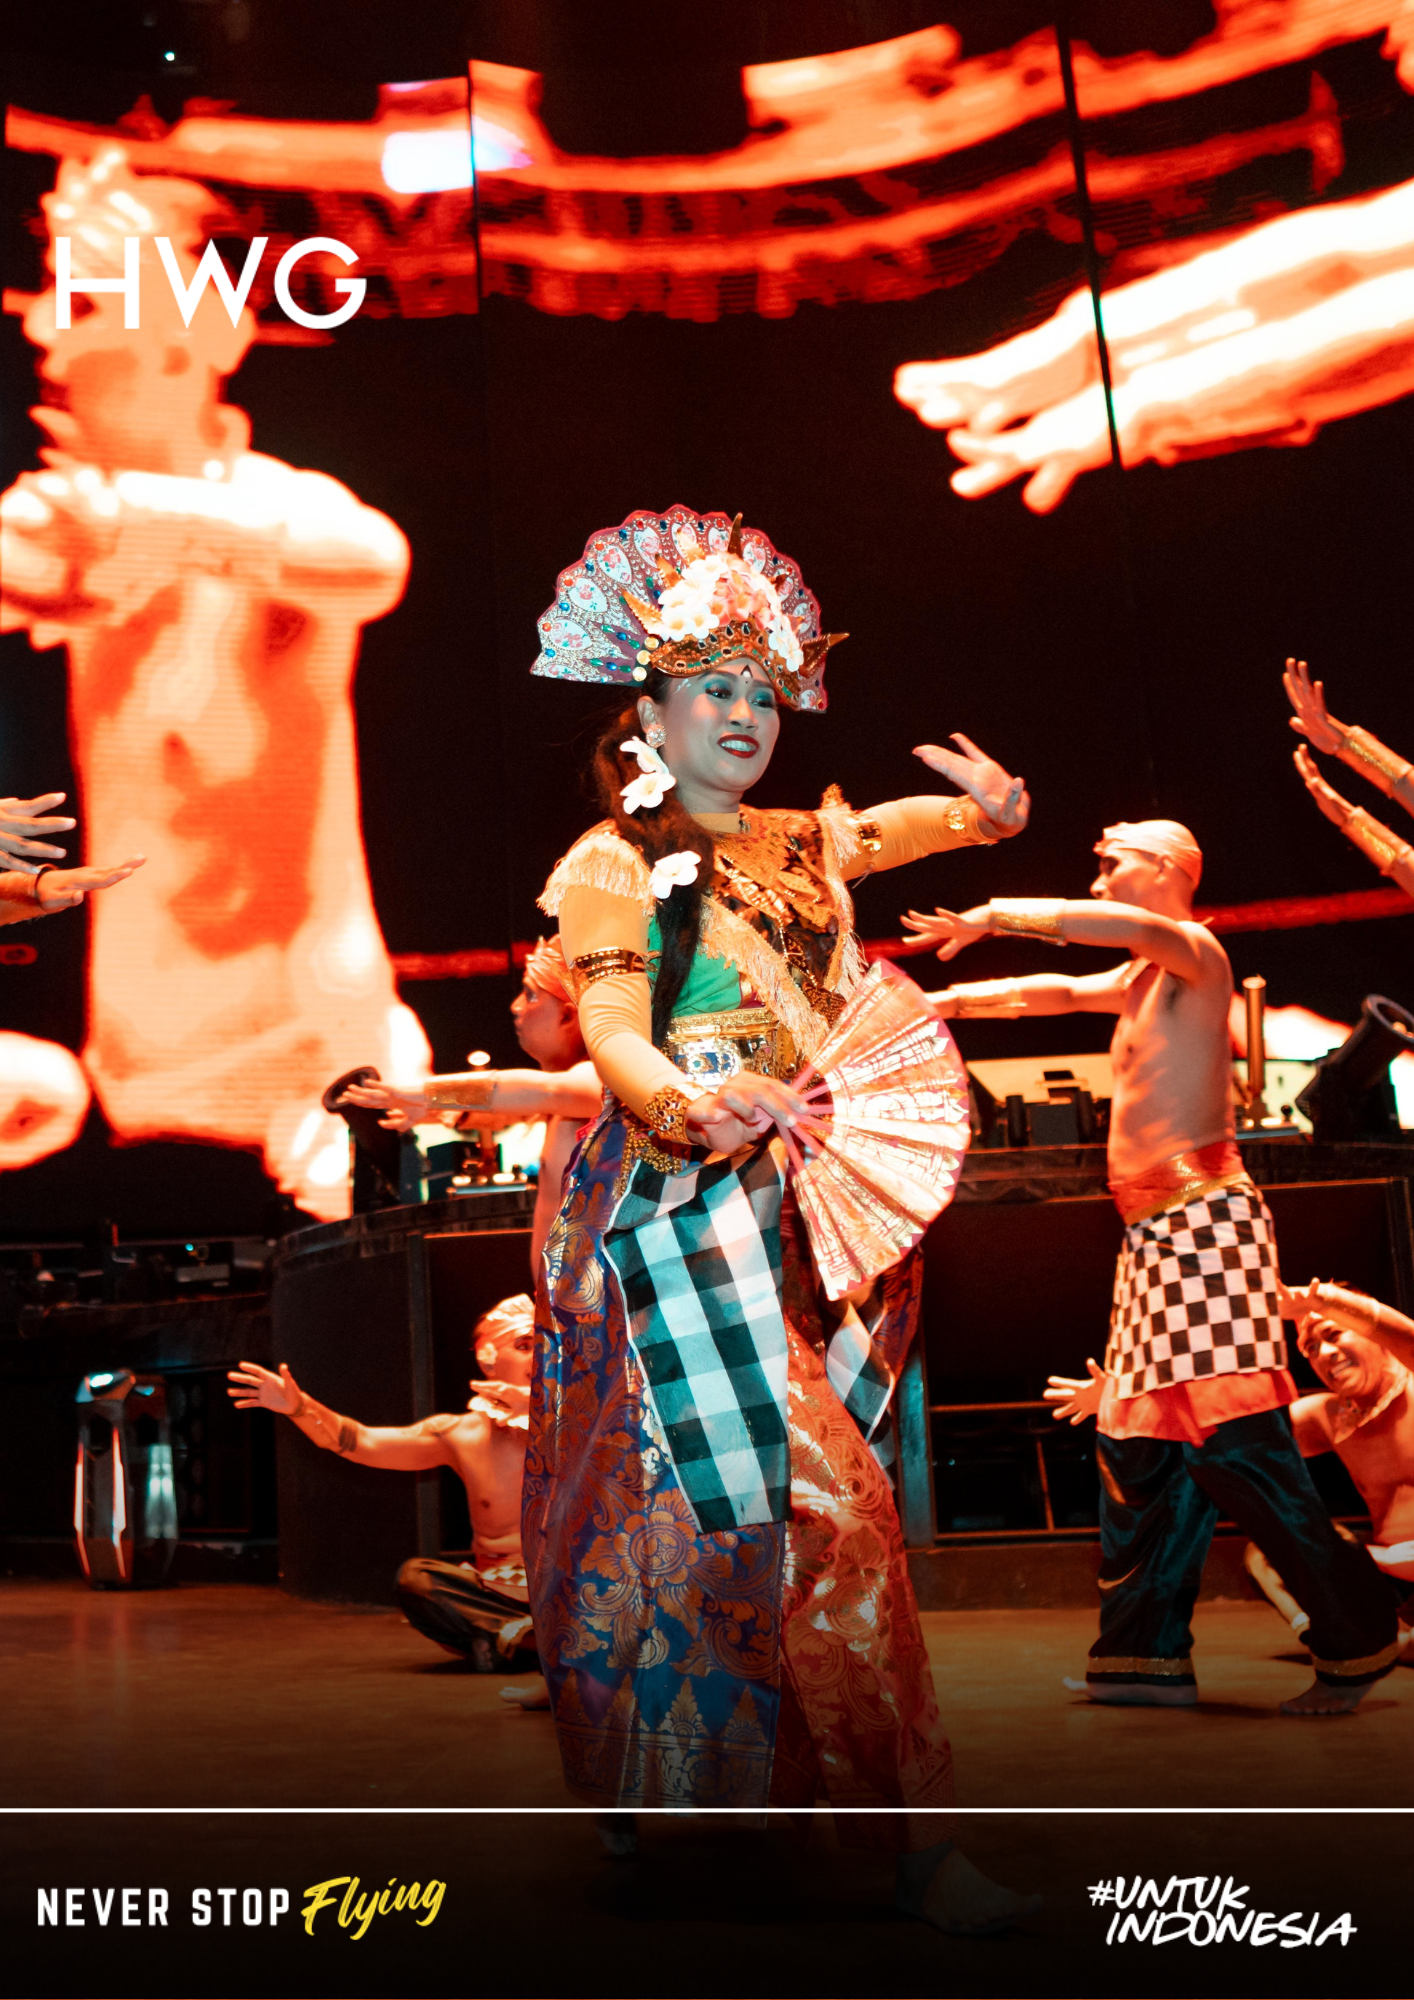 Collaborating with Atlas Beach Fest, H Club SCBD Presents Local Balinese Culture Through Kecak Dance